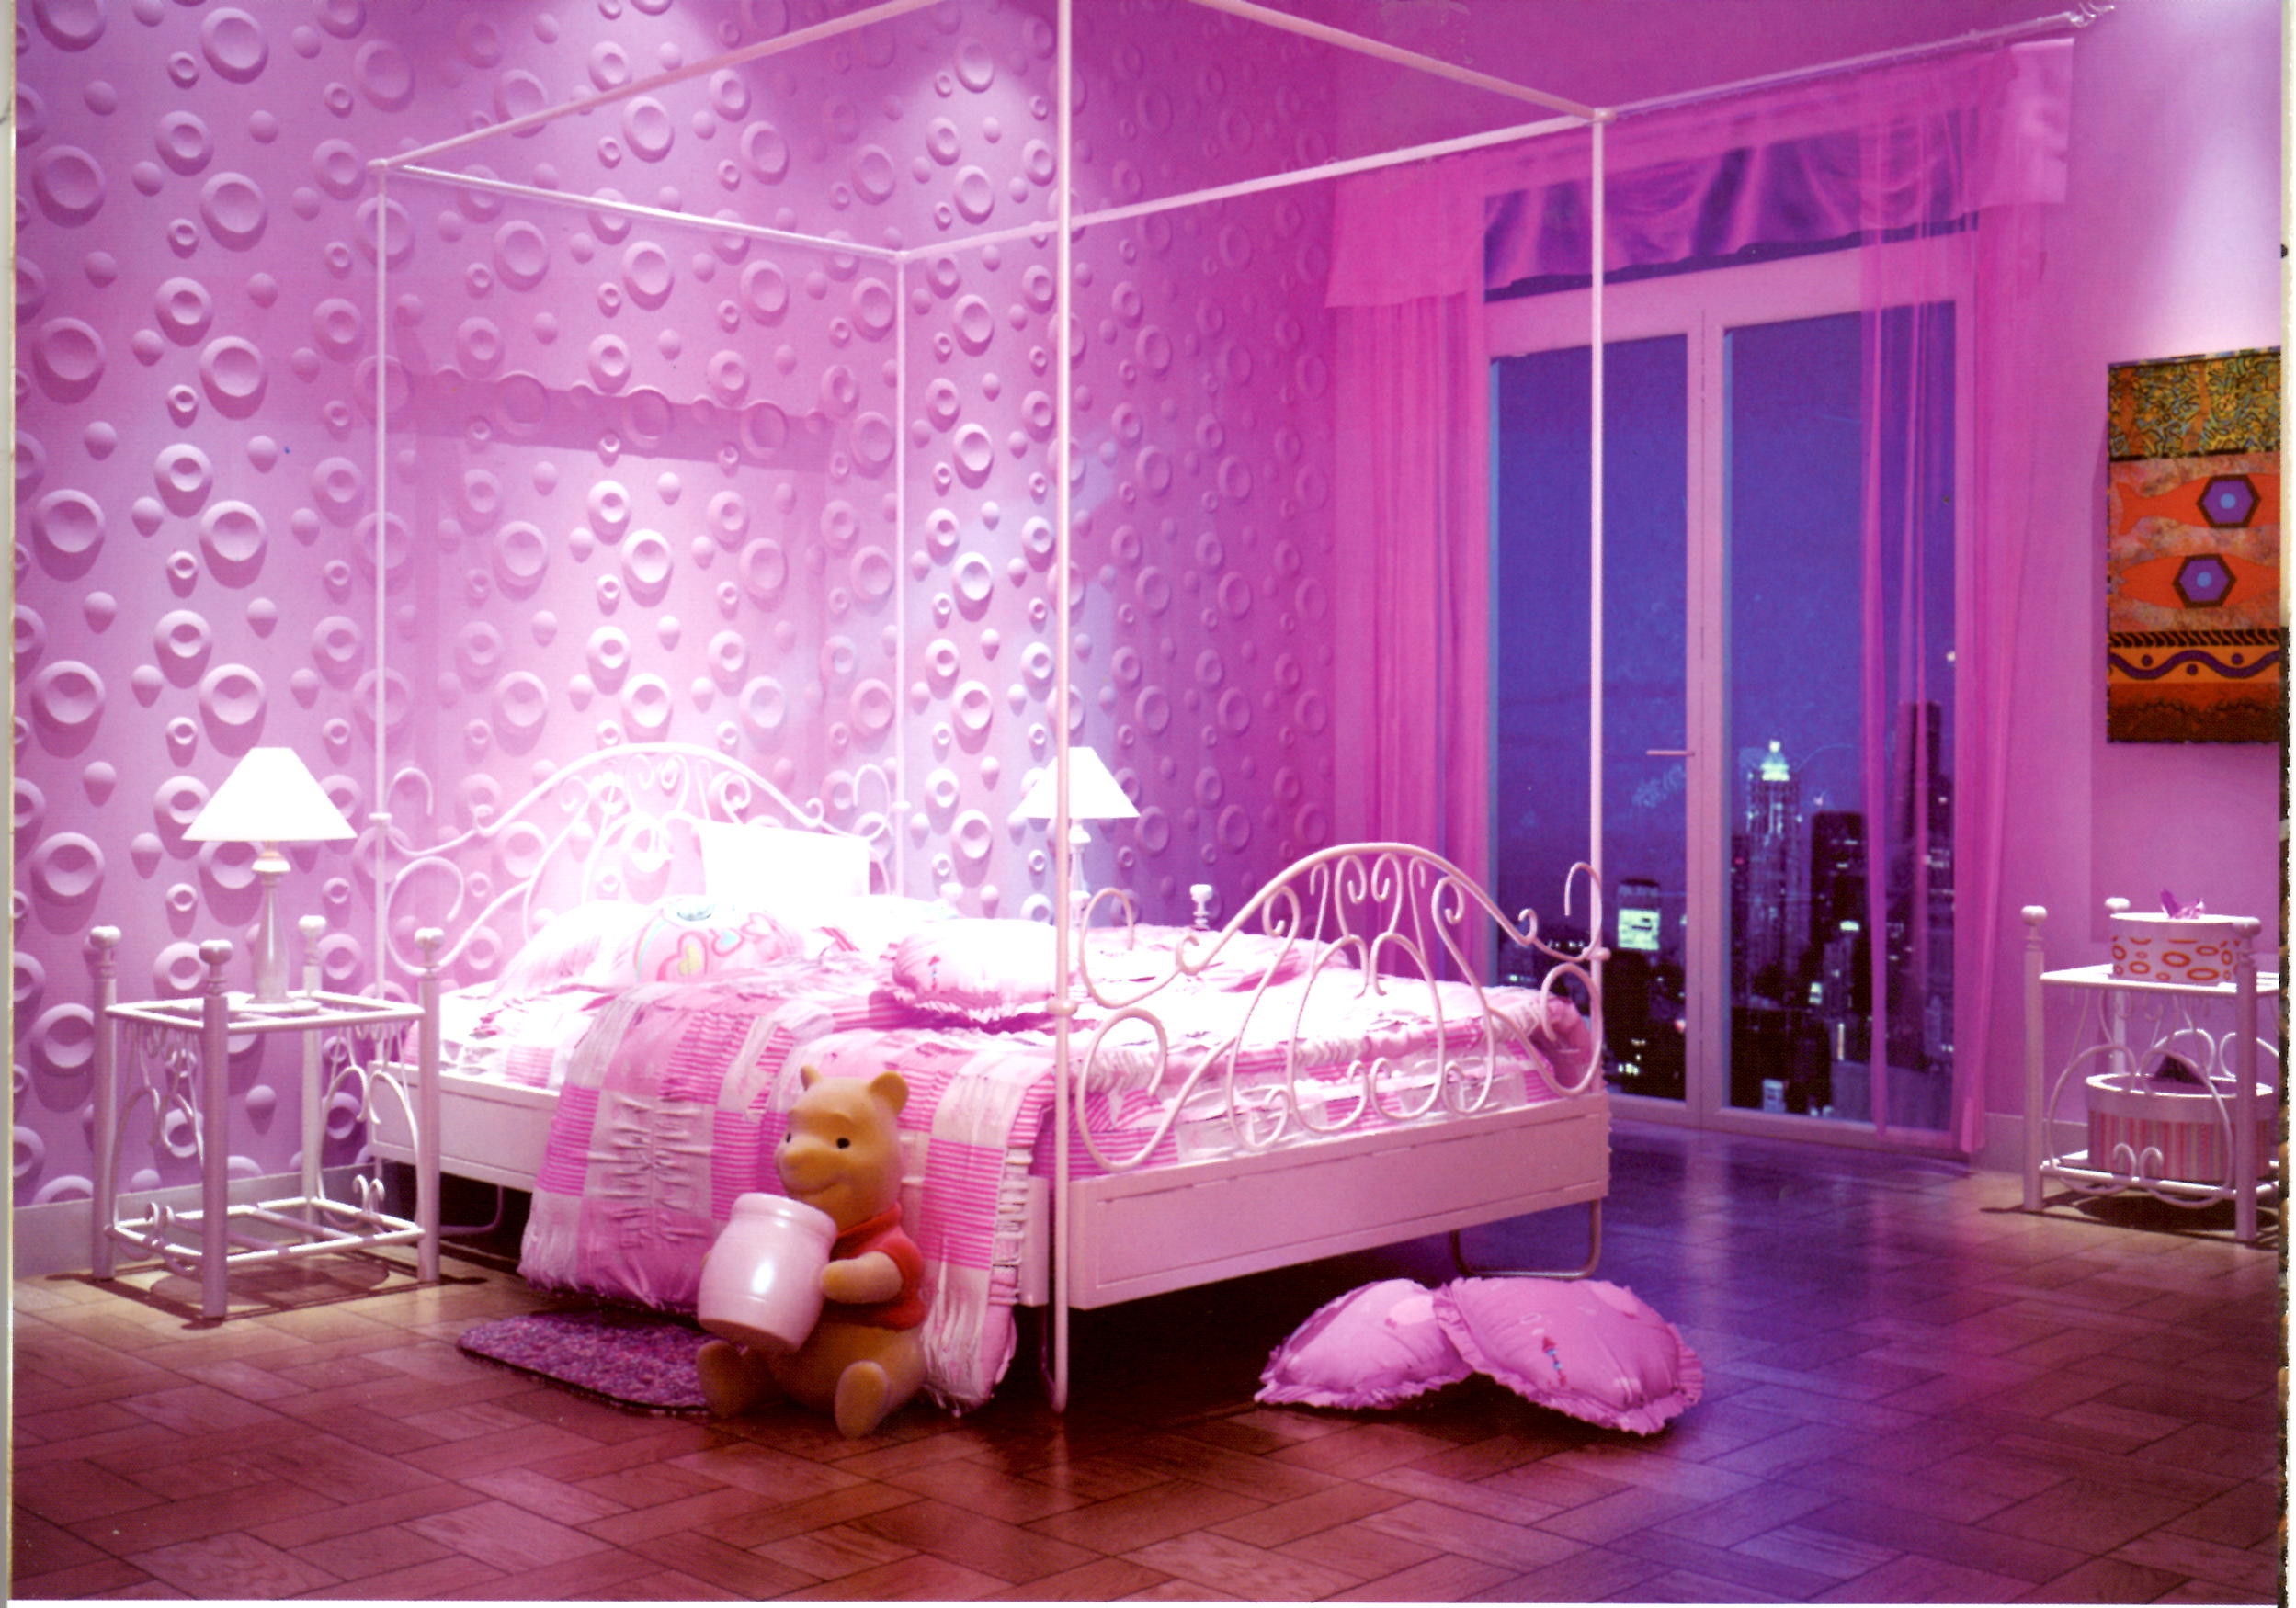 2498x1750 Pink Wallpaper for Bedrooms wallpaper Pink Wallpaper for Bedrooms hd  